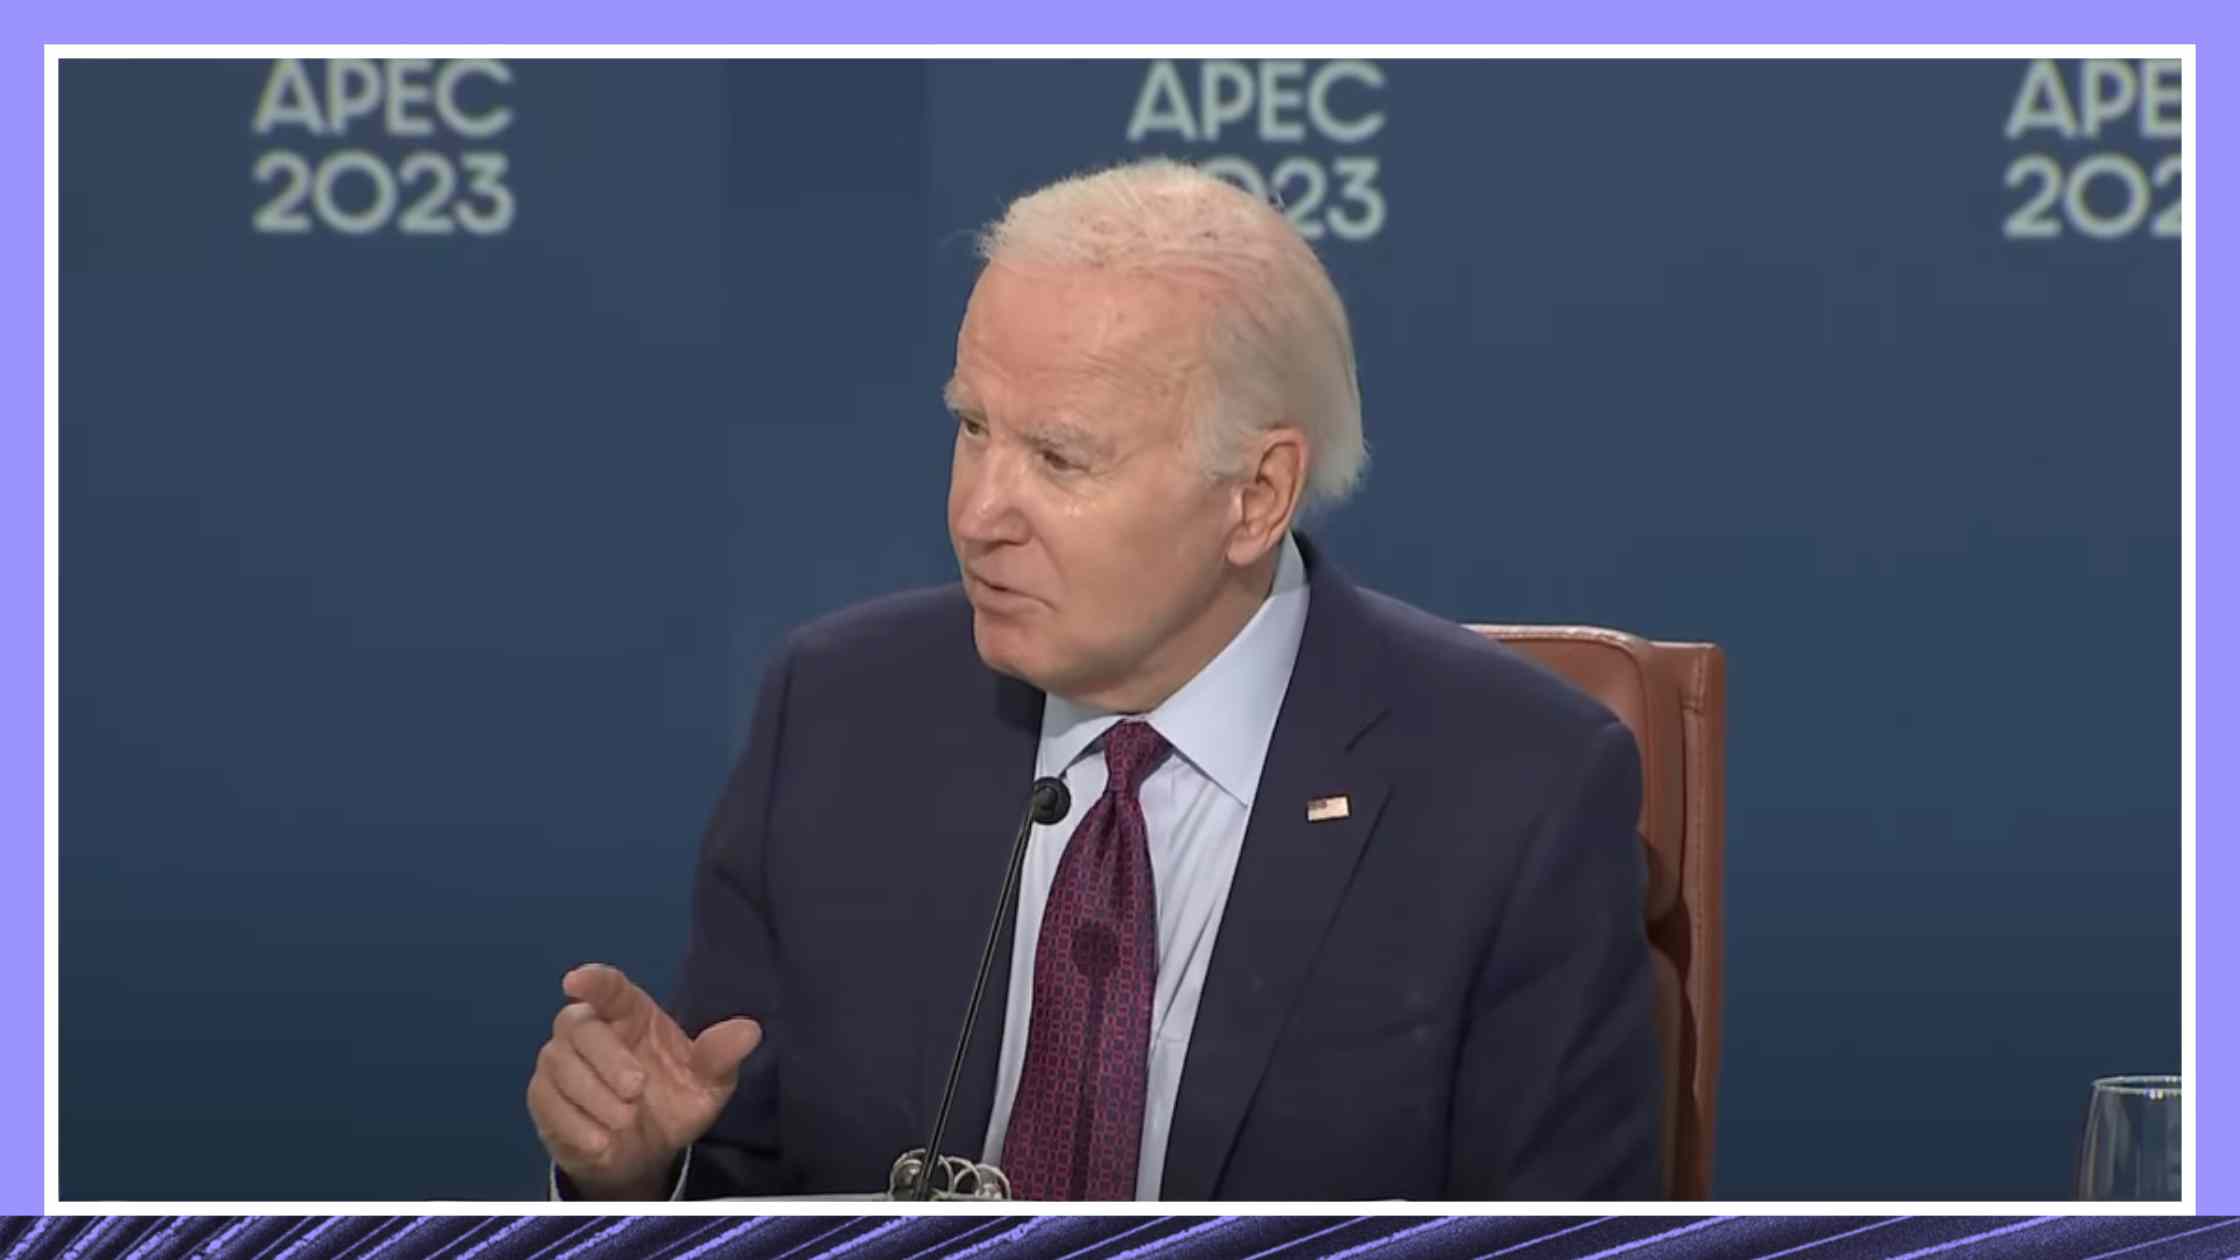 Biden Delivers Remarks at Final Session of APEC Summit Transcript